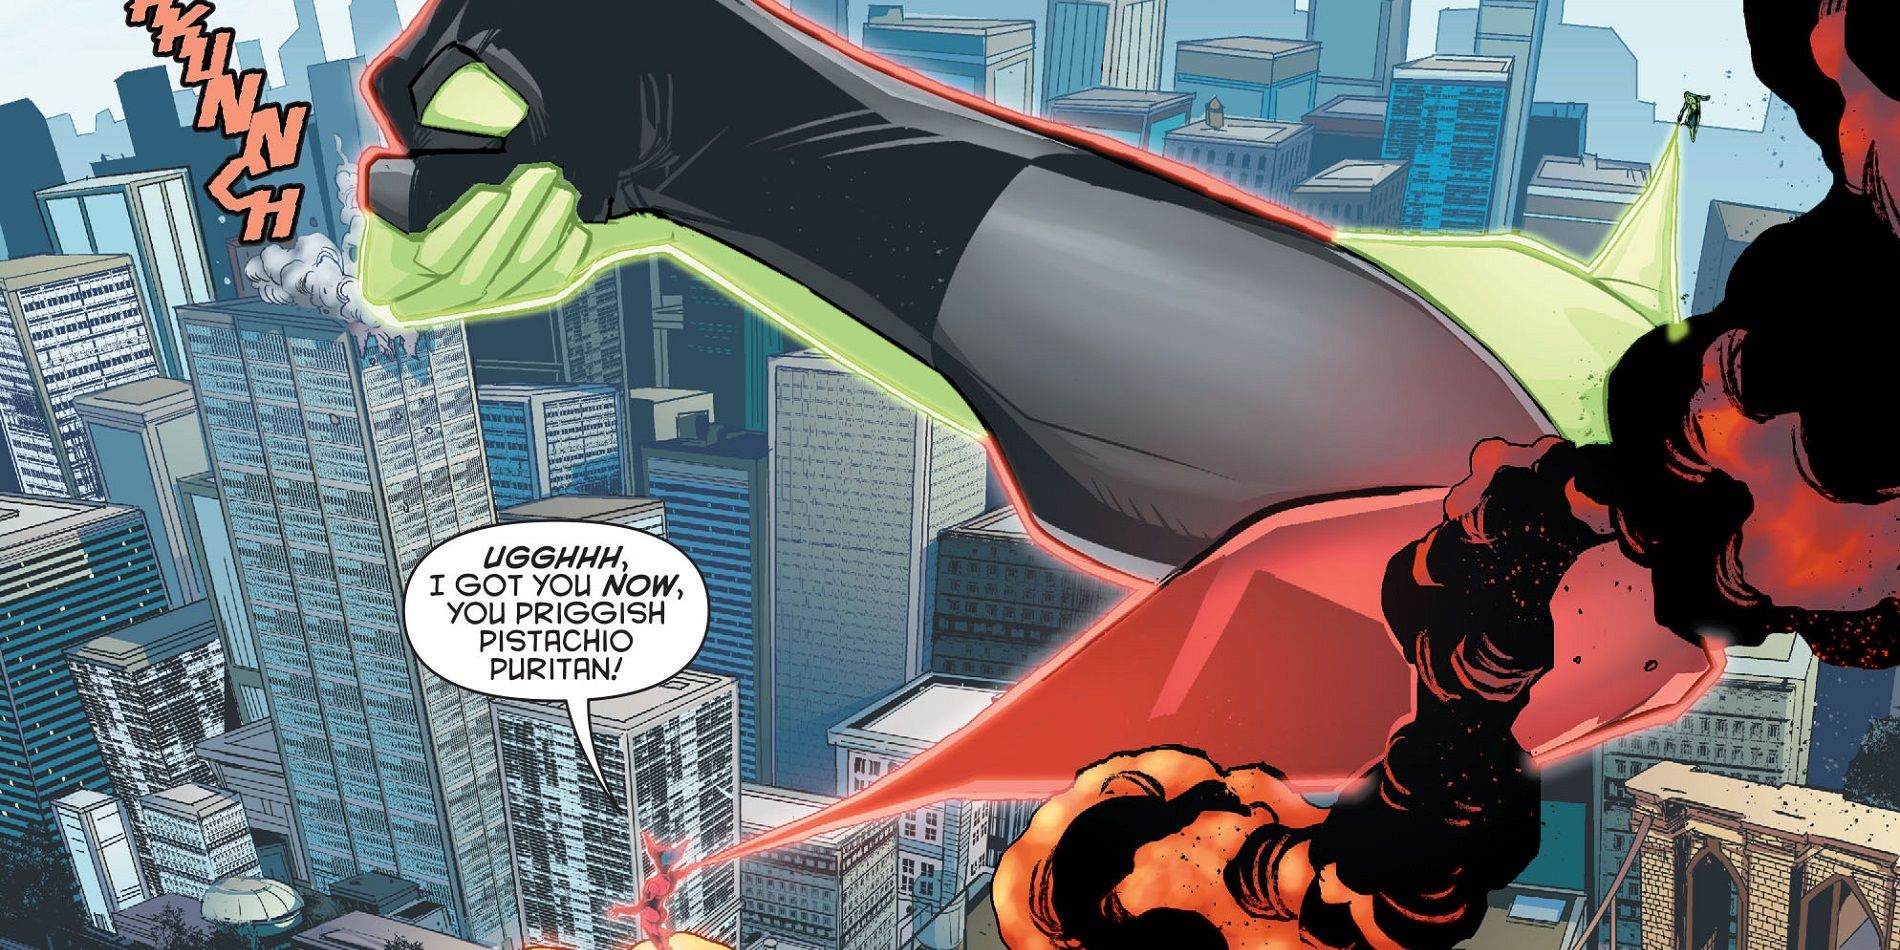 Harley Quinn arm wrestles Green Lantern